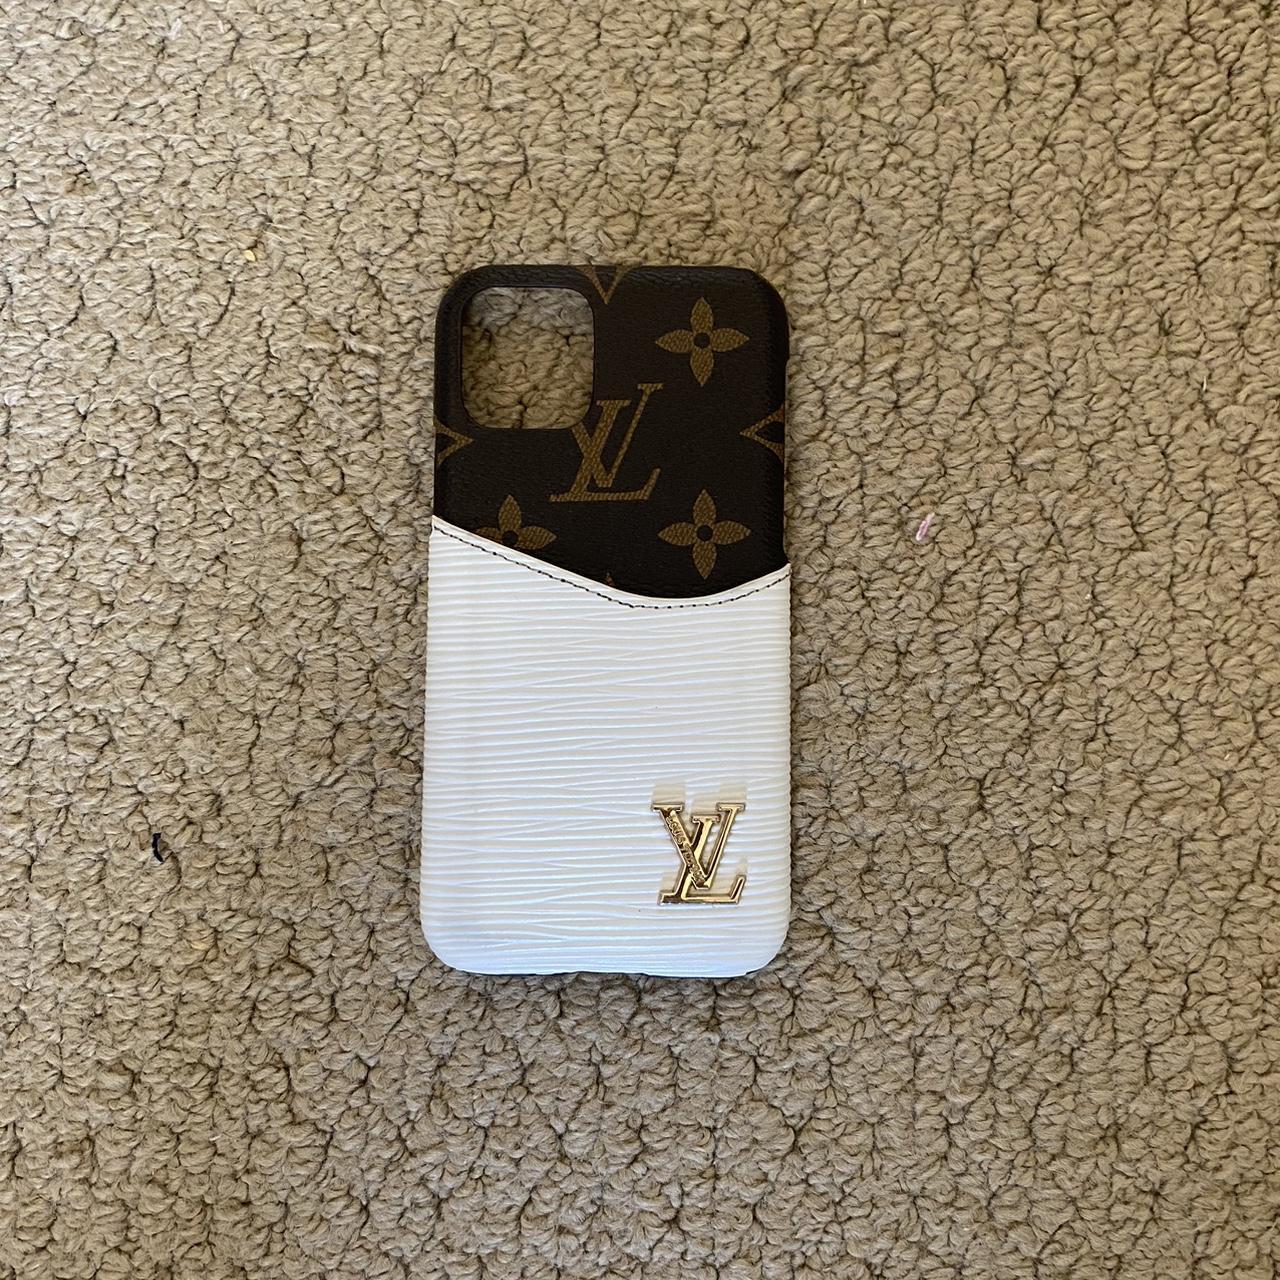 iPhone 11 louis Vuitton phone case the case can - Depop